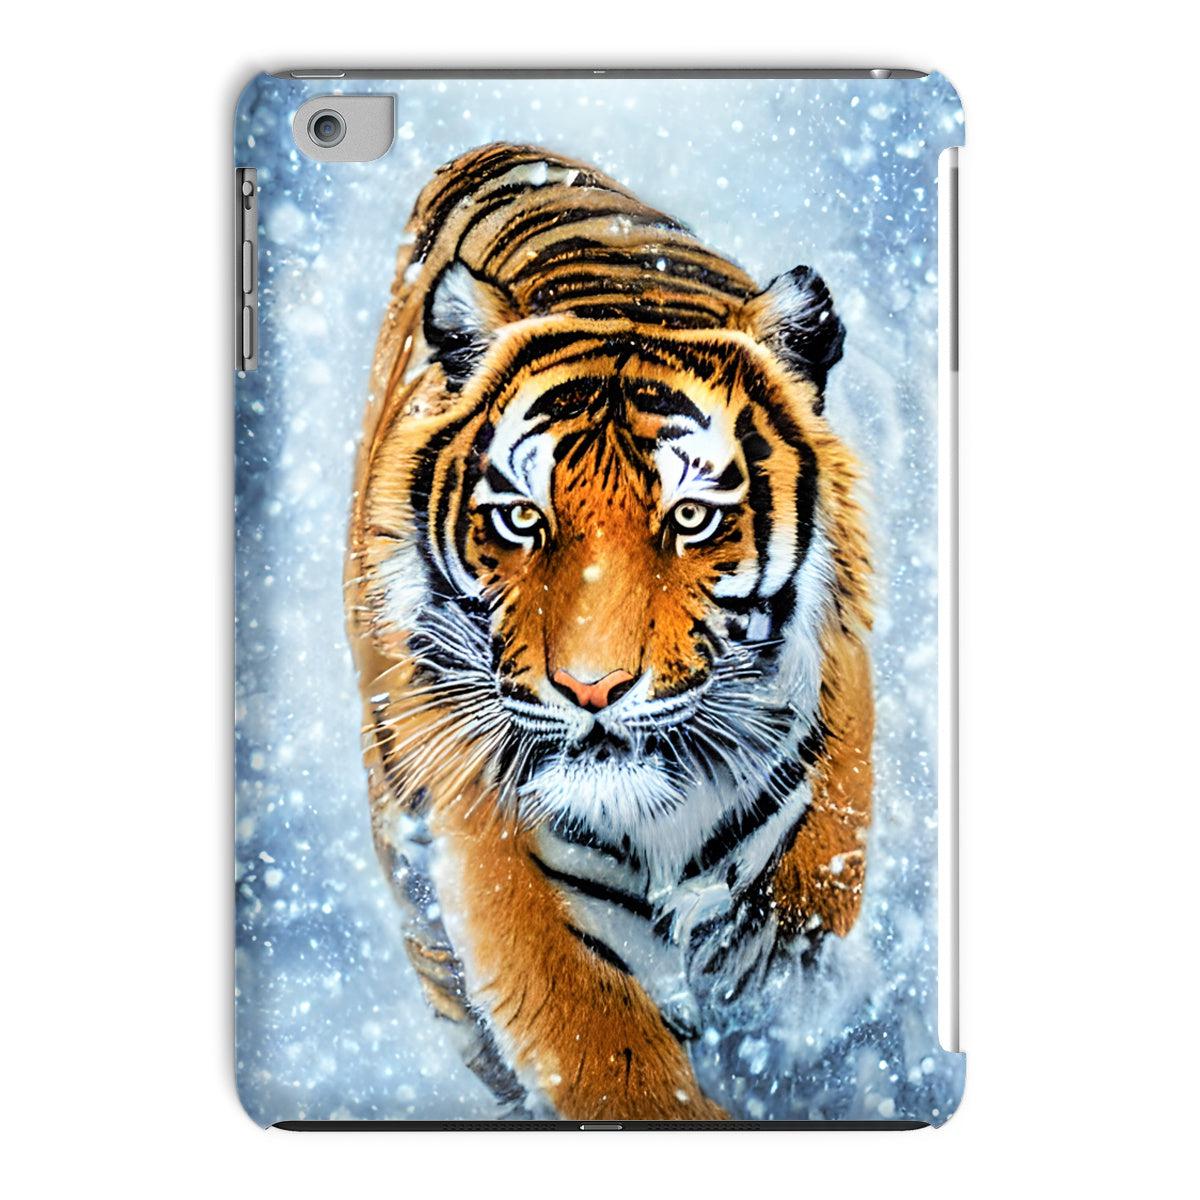 Tiger Snow Tablet Case